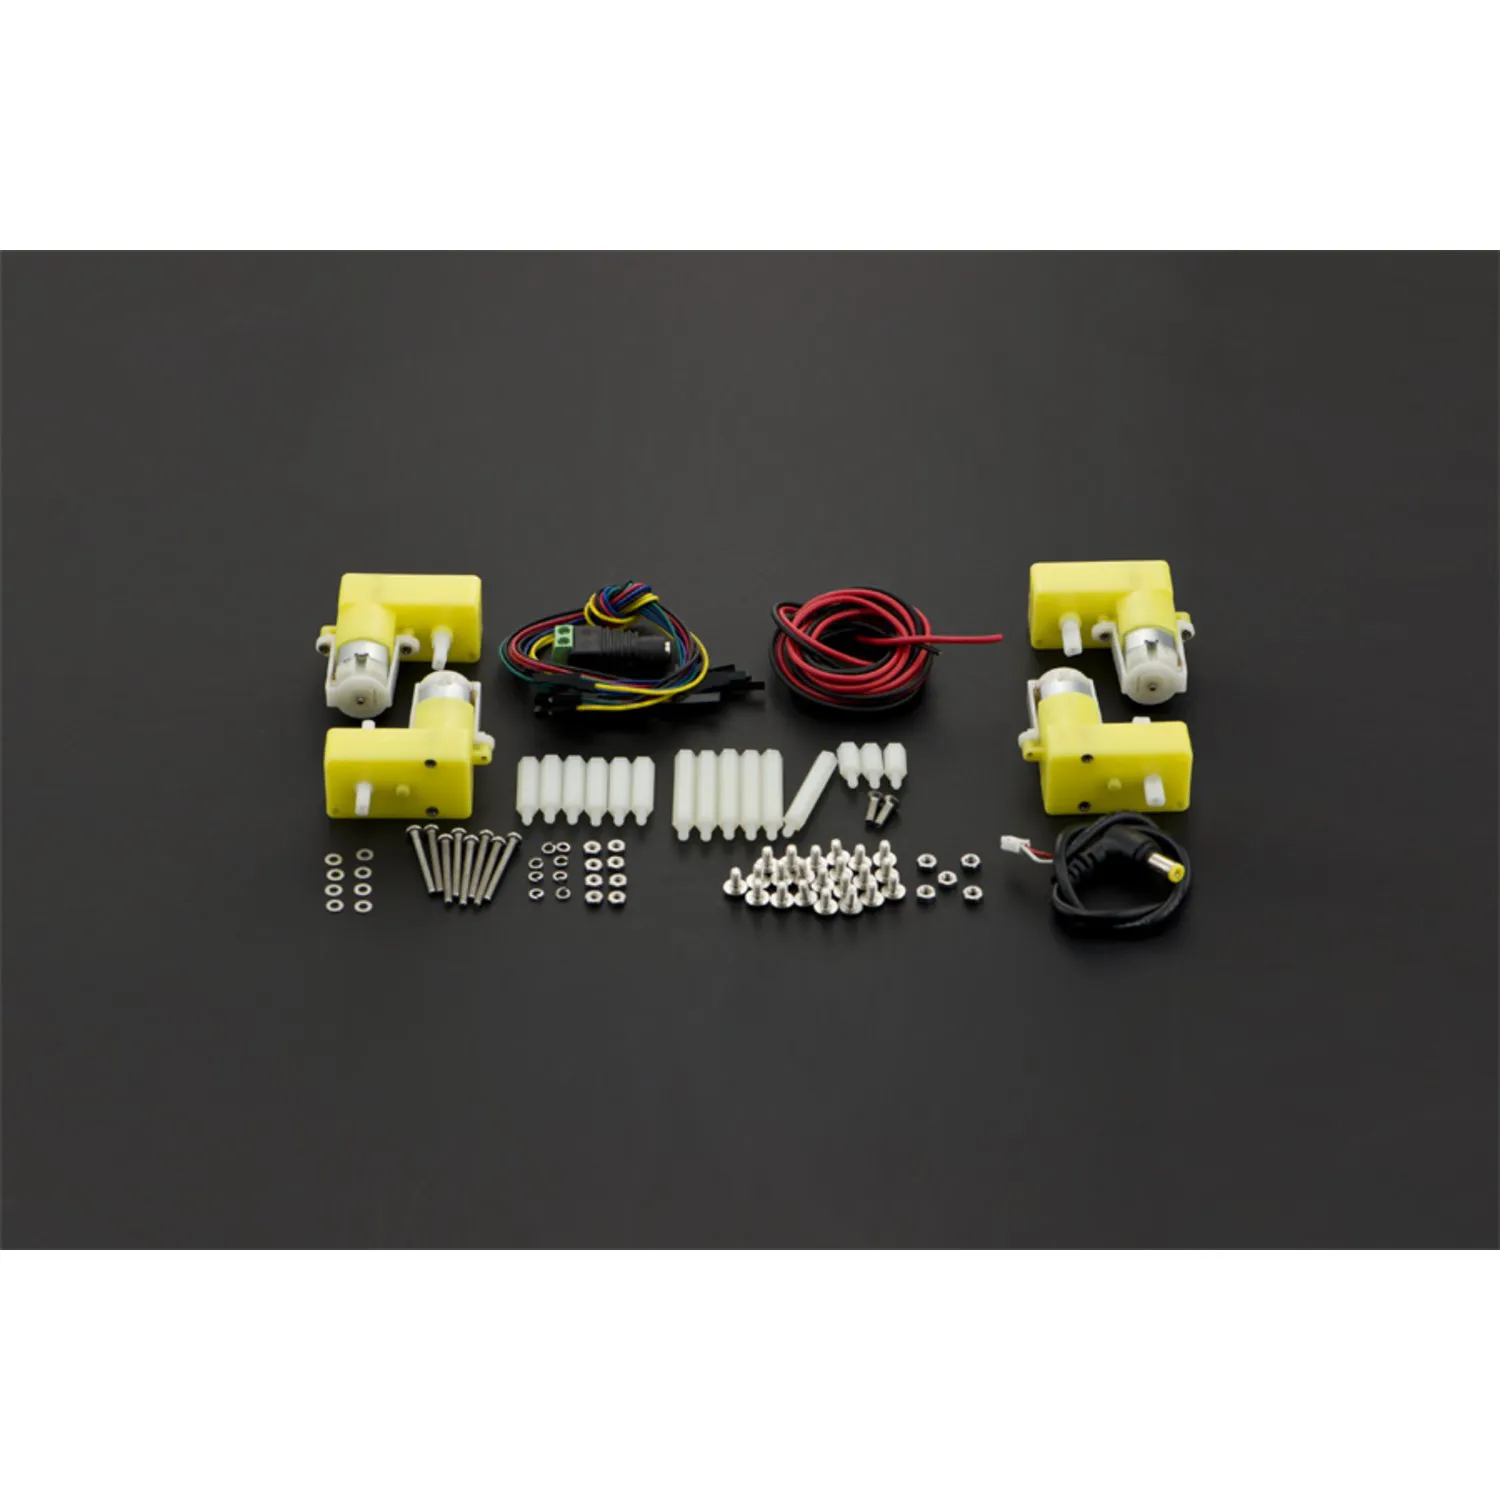 Photo of Cherokey:4WD Basic Arduino Robot Building Kit